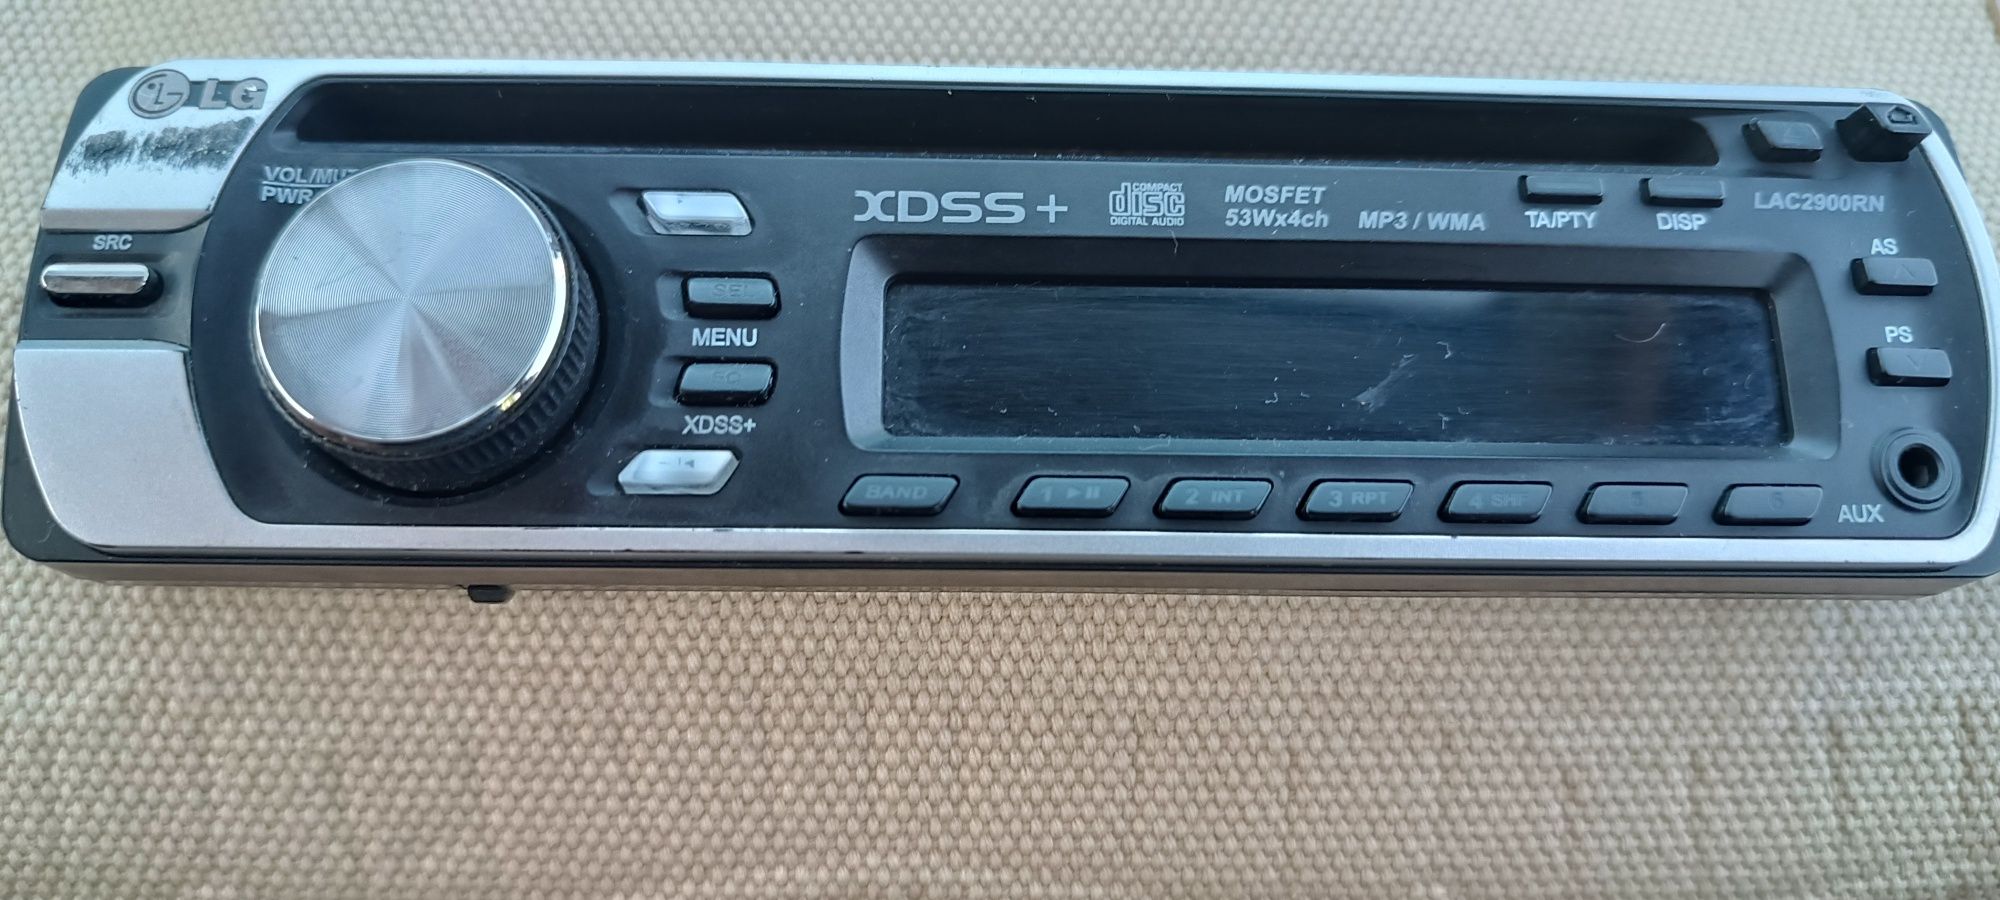 Авто радио  XDSS+ LAC2900RN